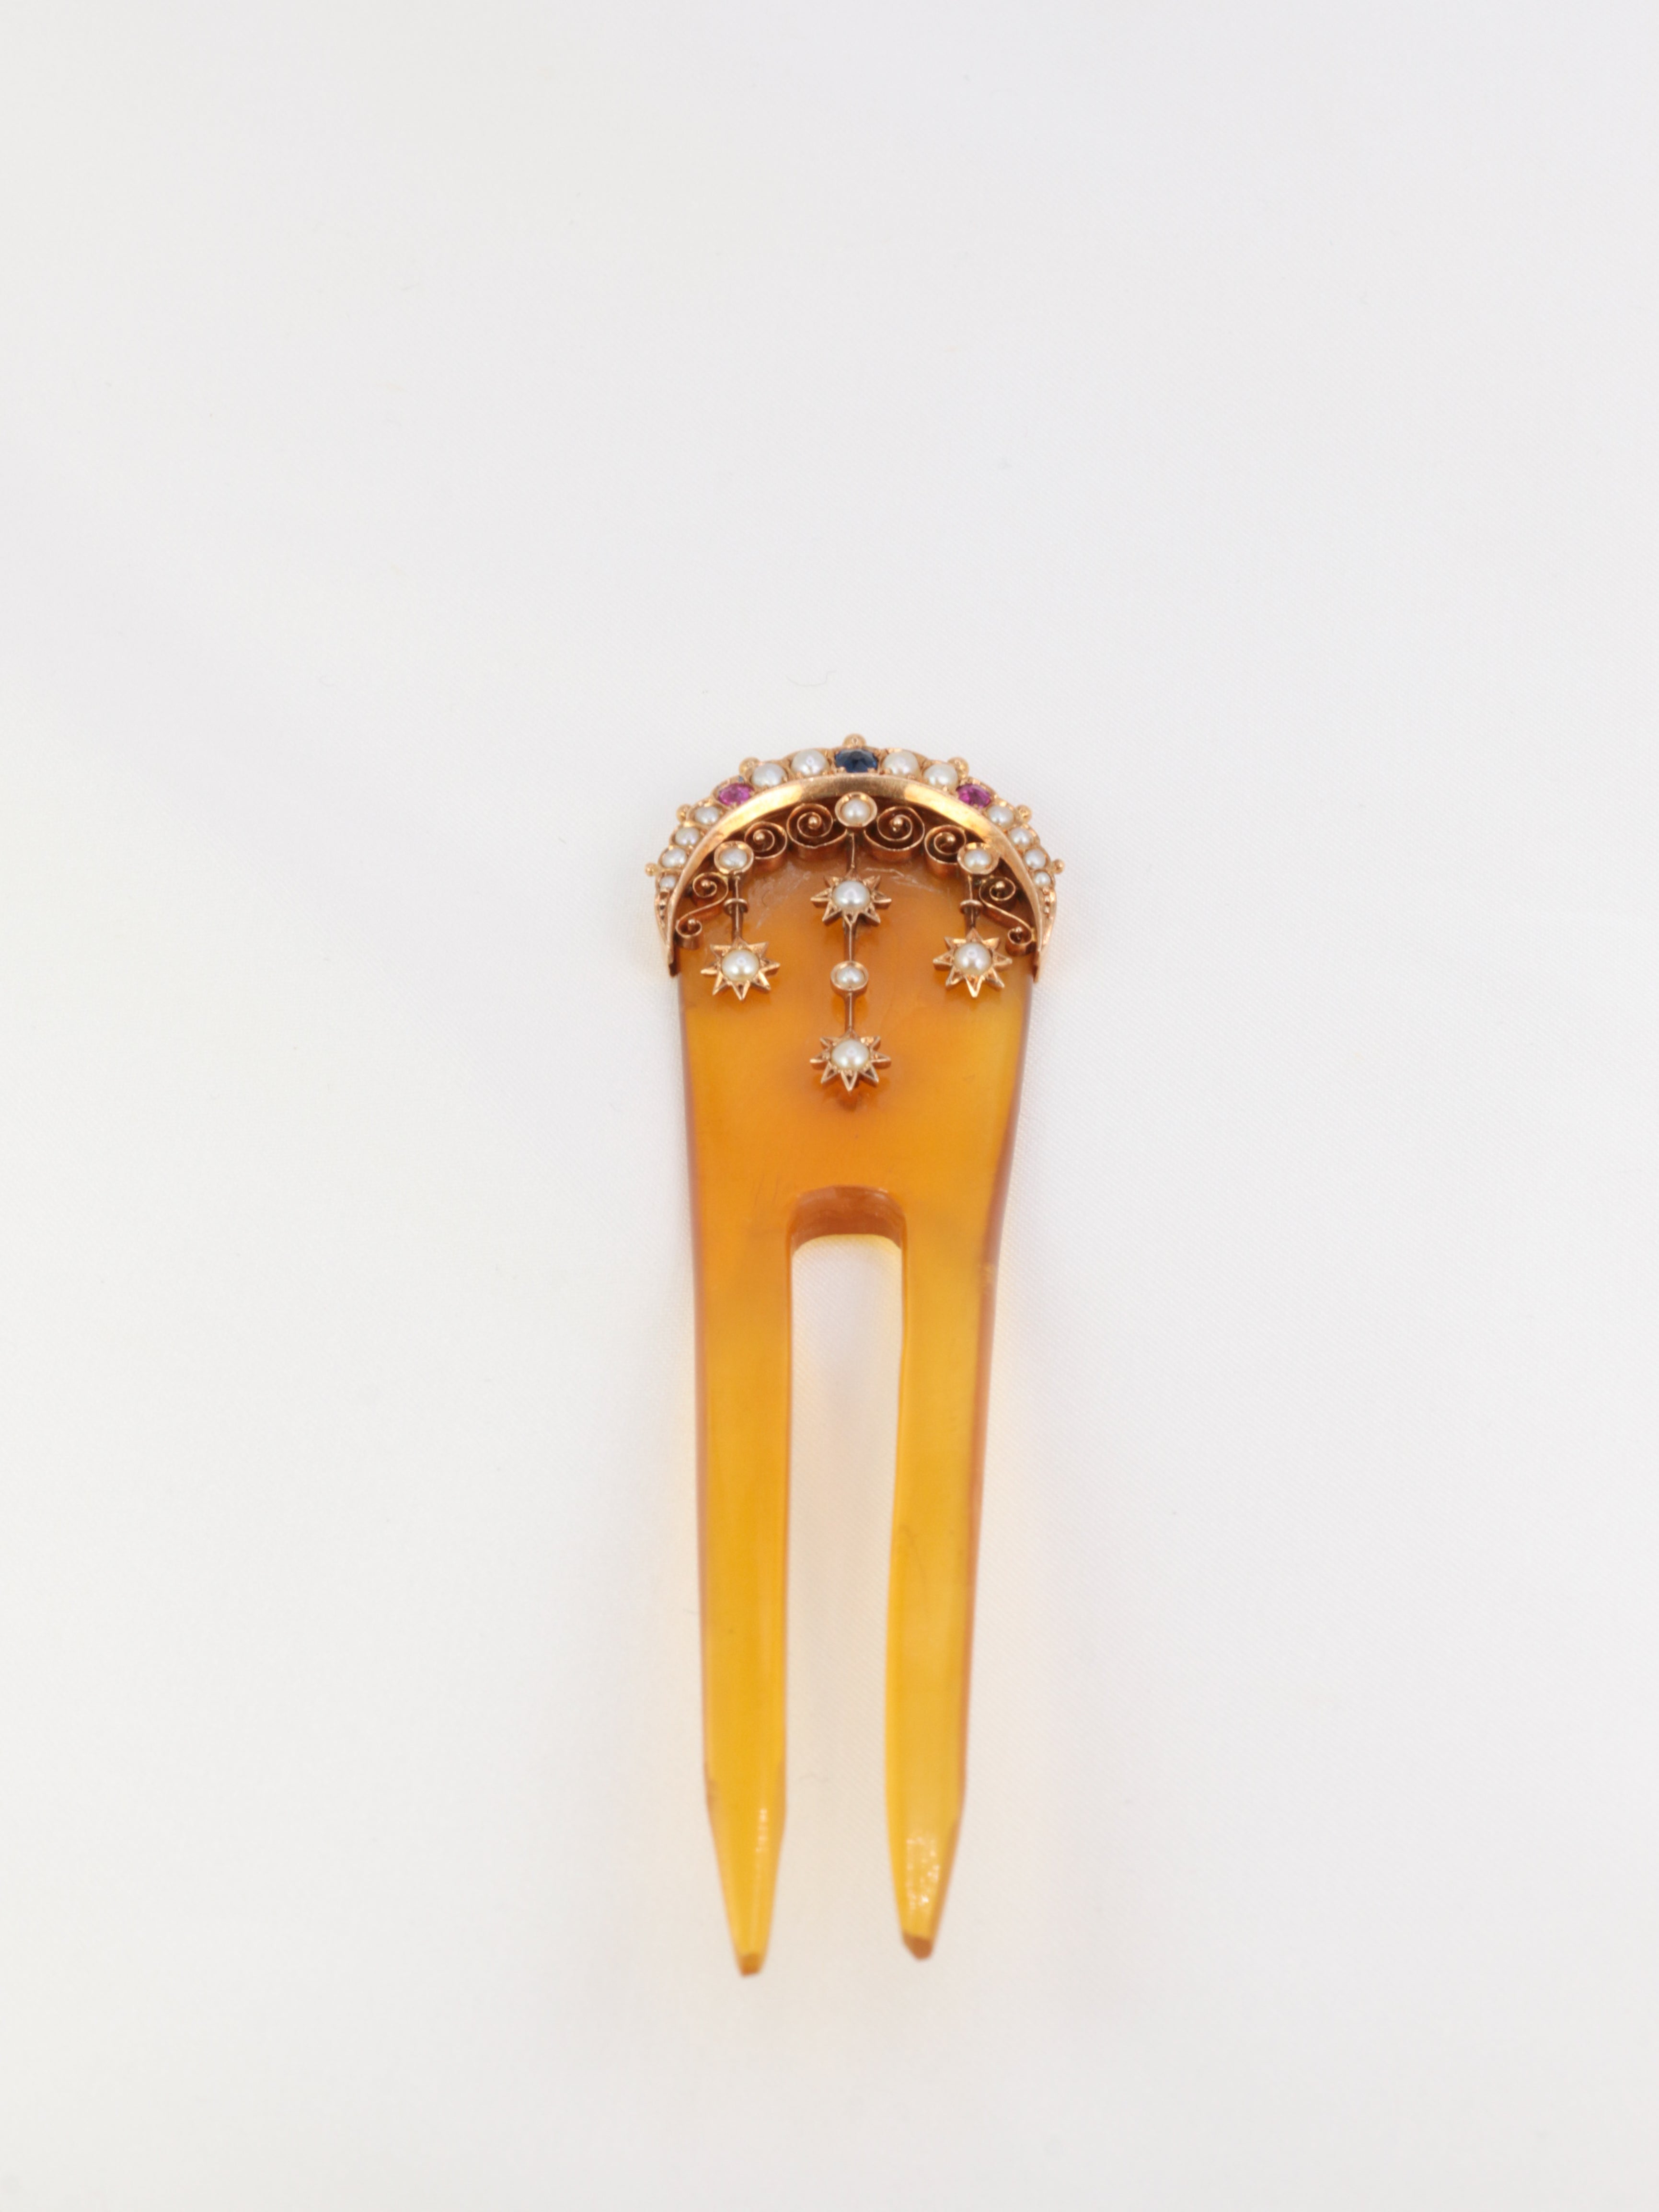 Peigne ancien en or, corne, perles fines, saphirs et rubis